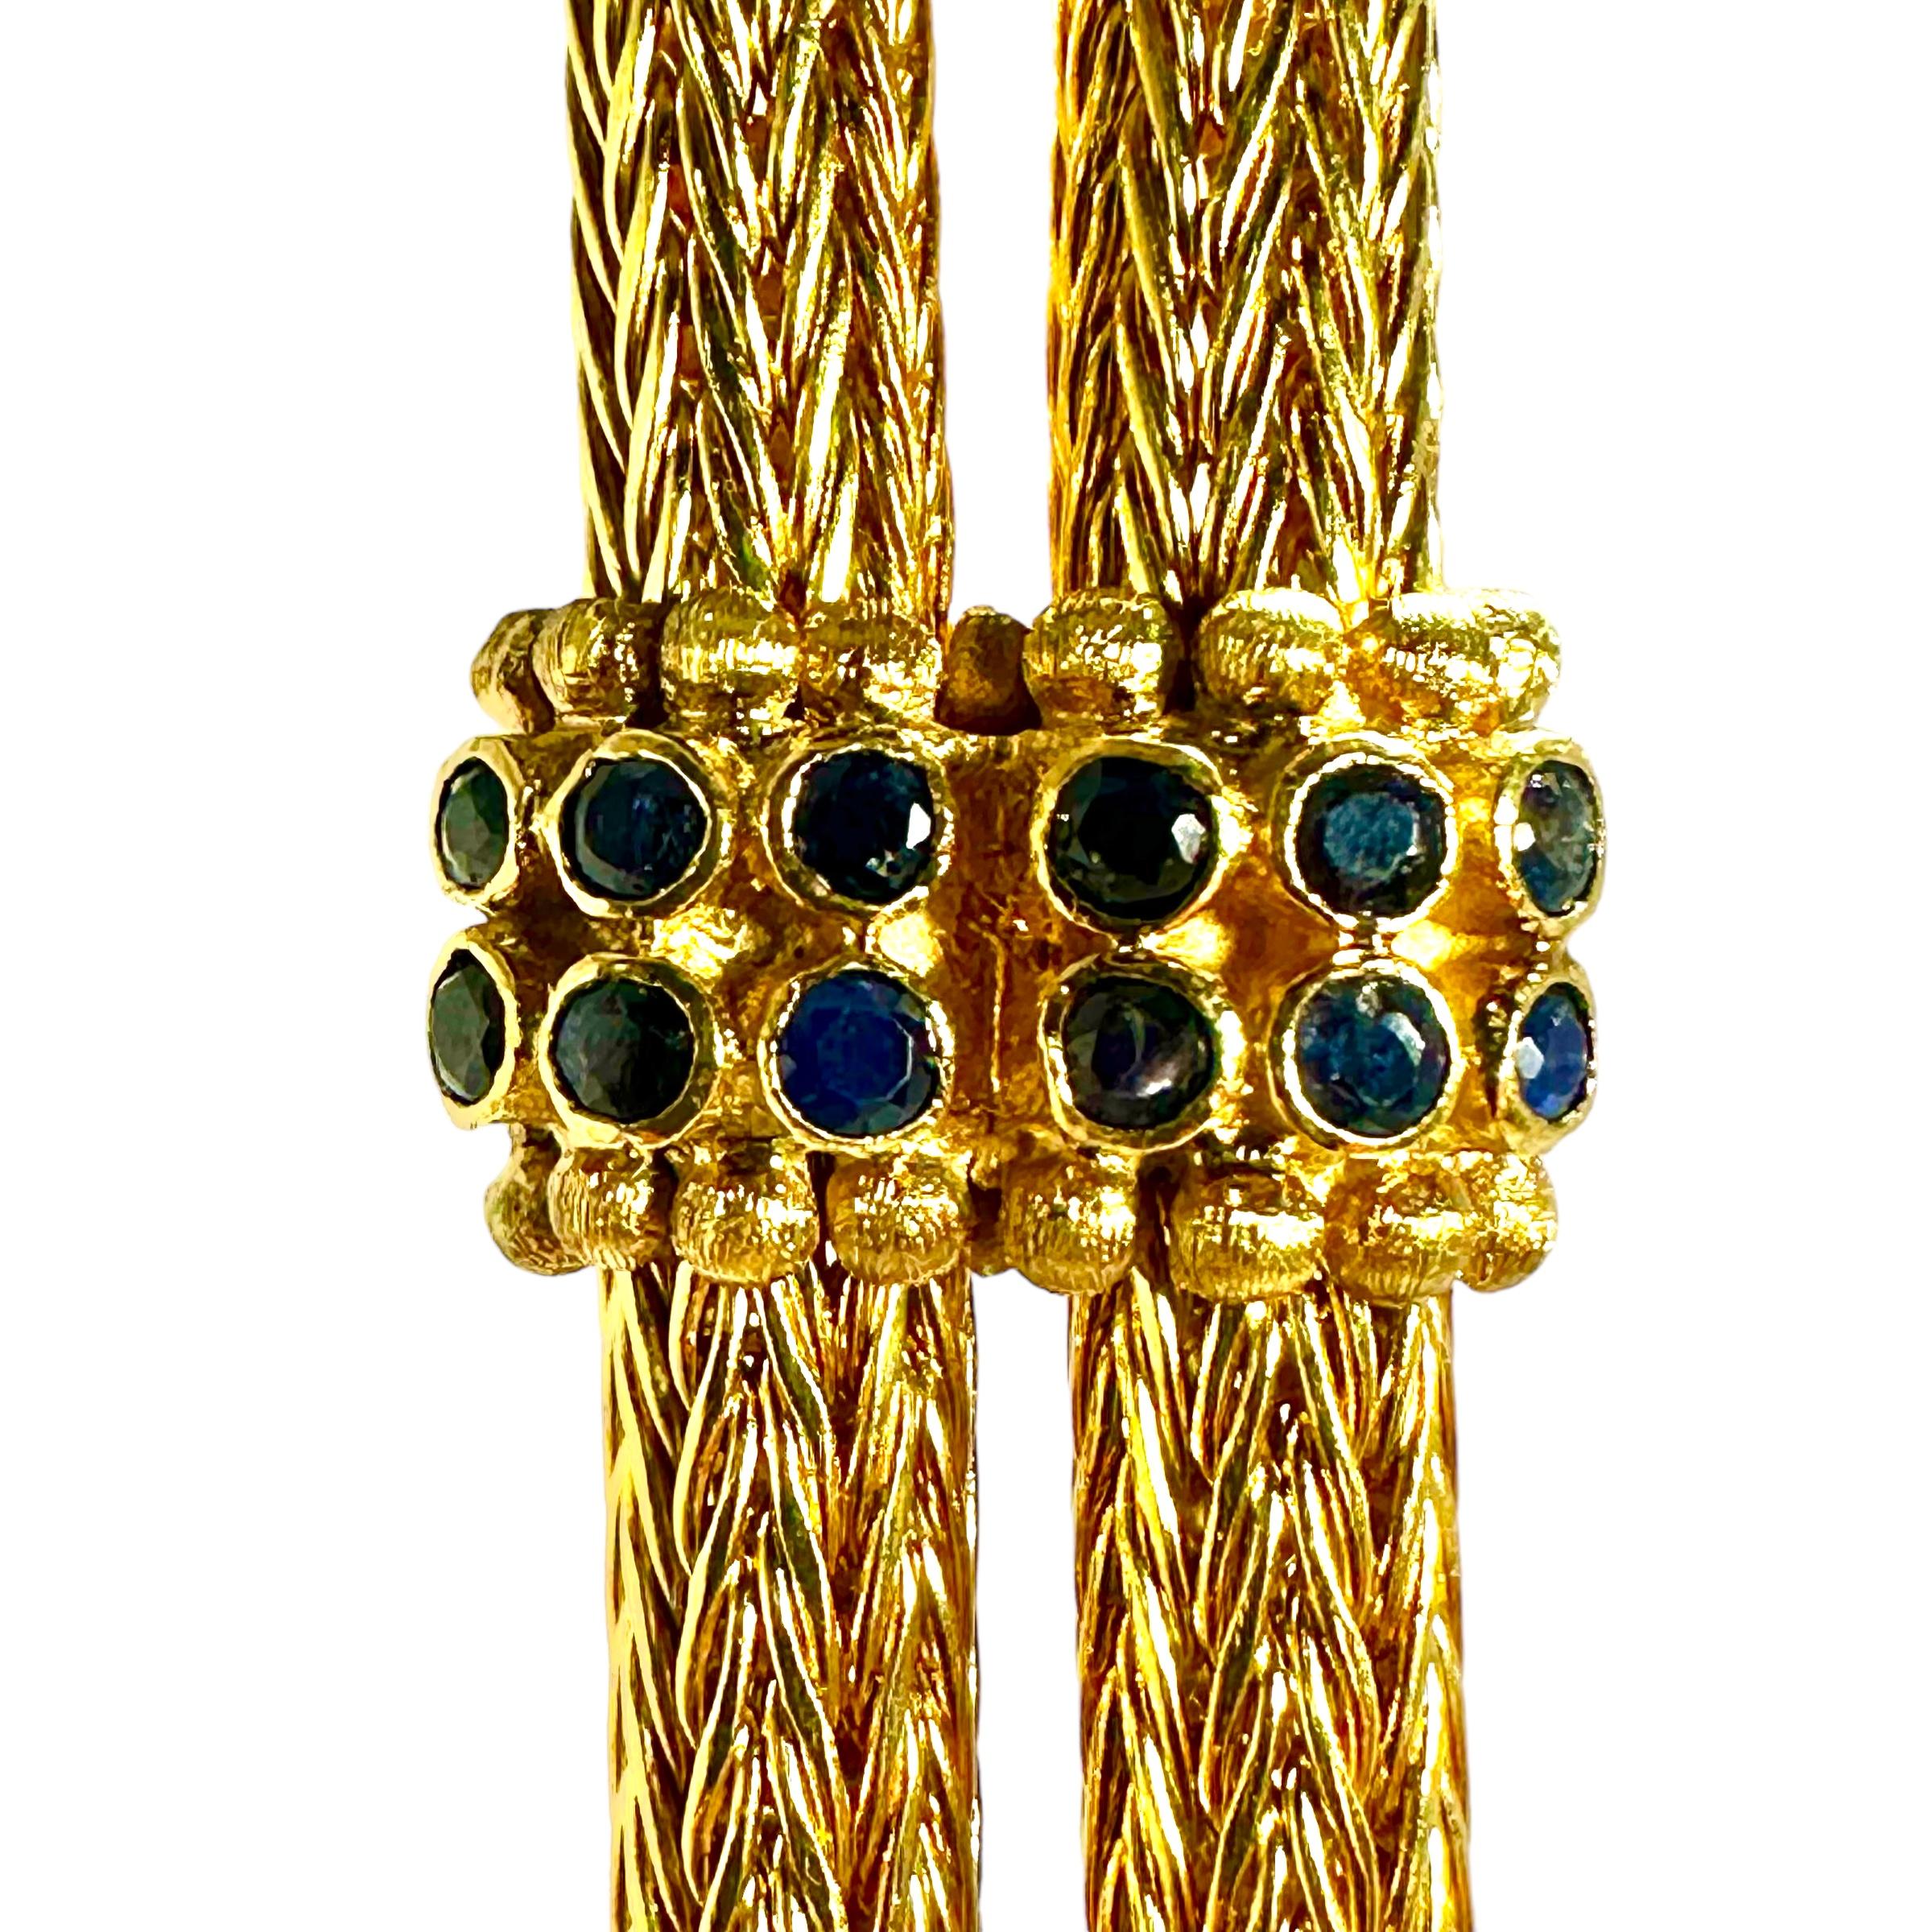 Monumentale Lalaounis 18k Gold Doppelter Widderkopf-Halskette in Monumentalgröße 38 Zoll lang im Angebot 2